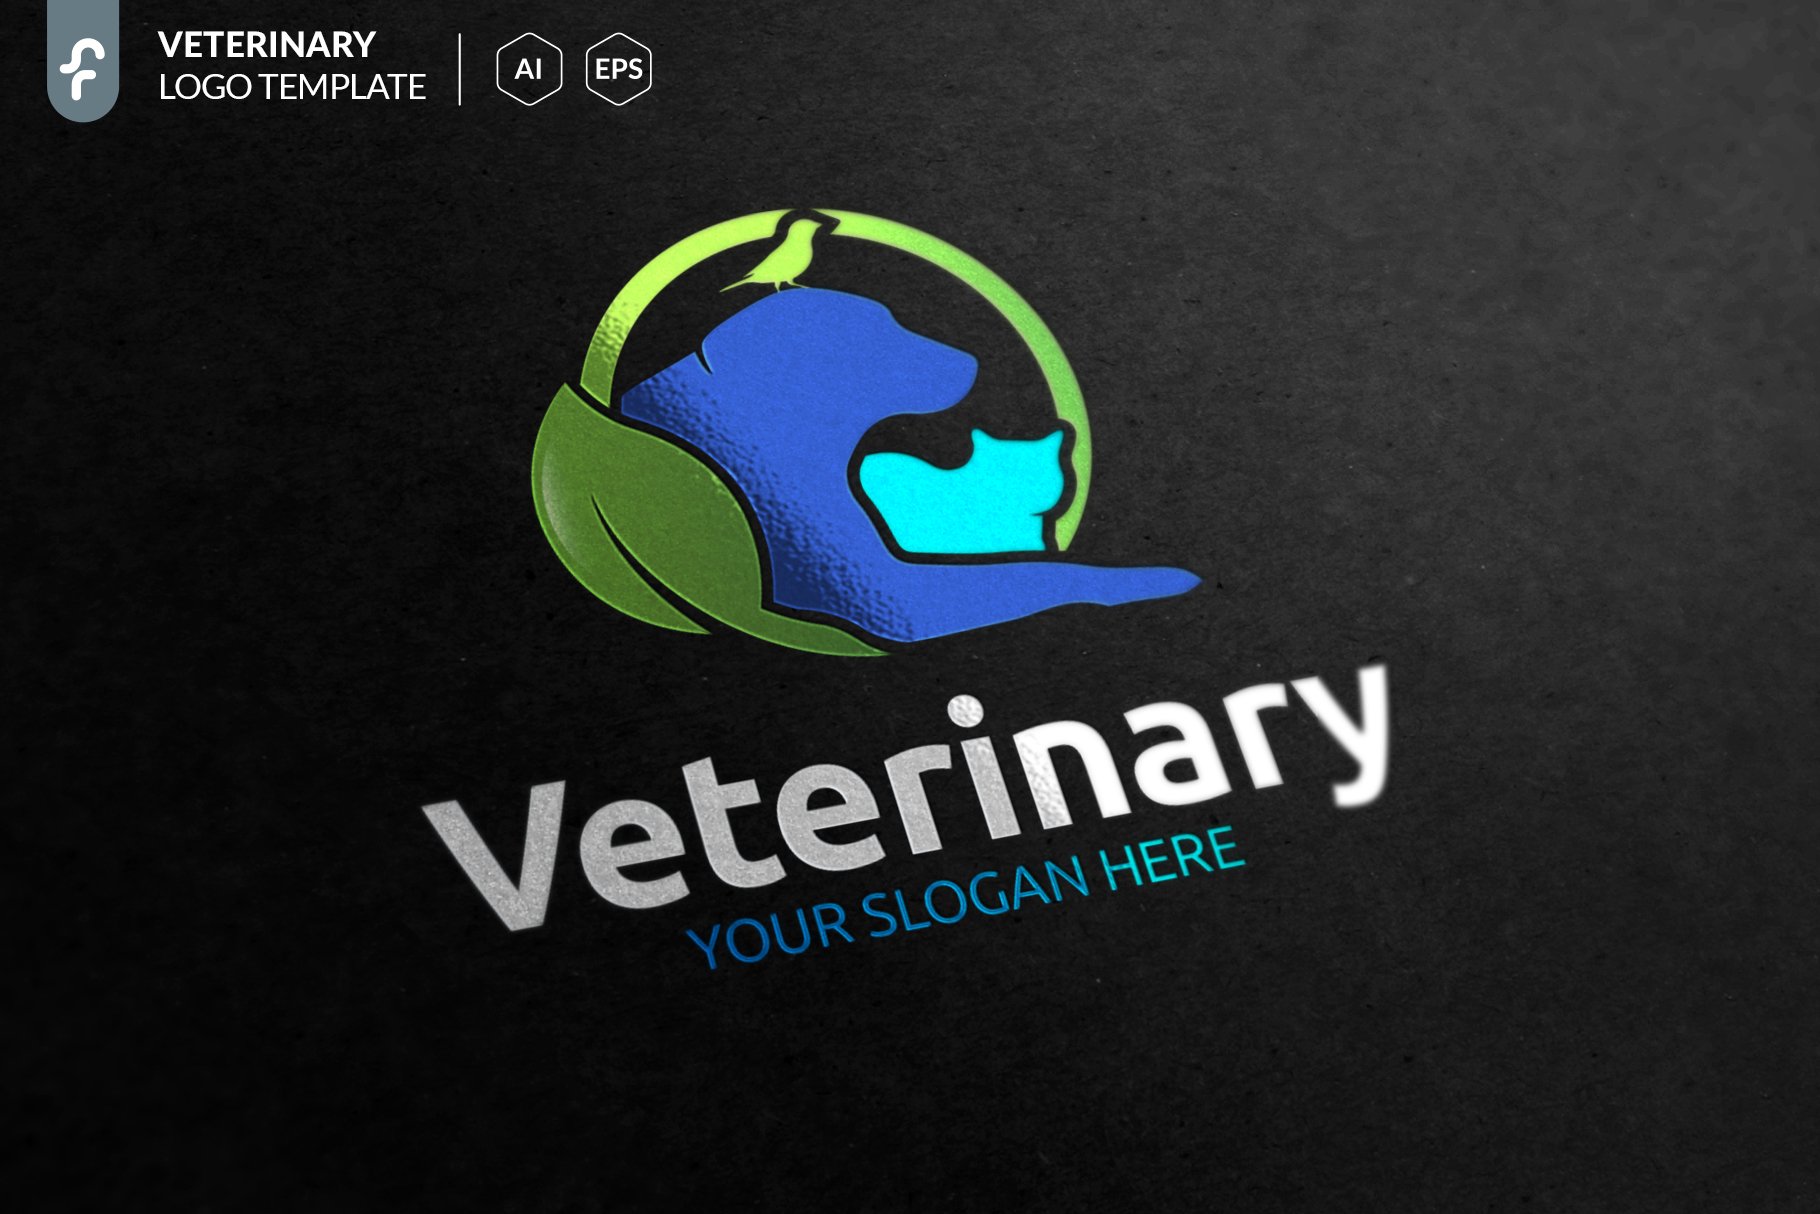 Veterinary Logo preview image.